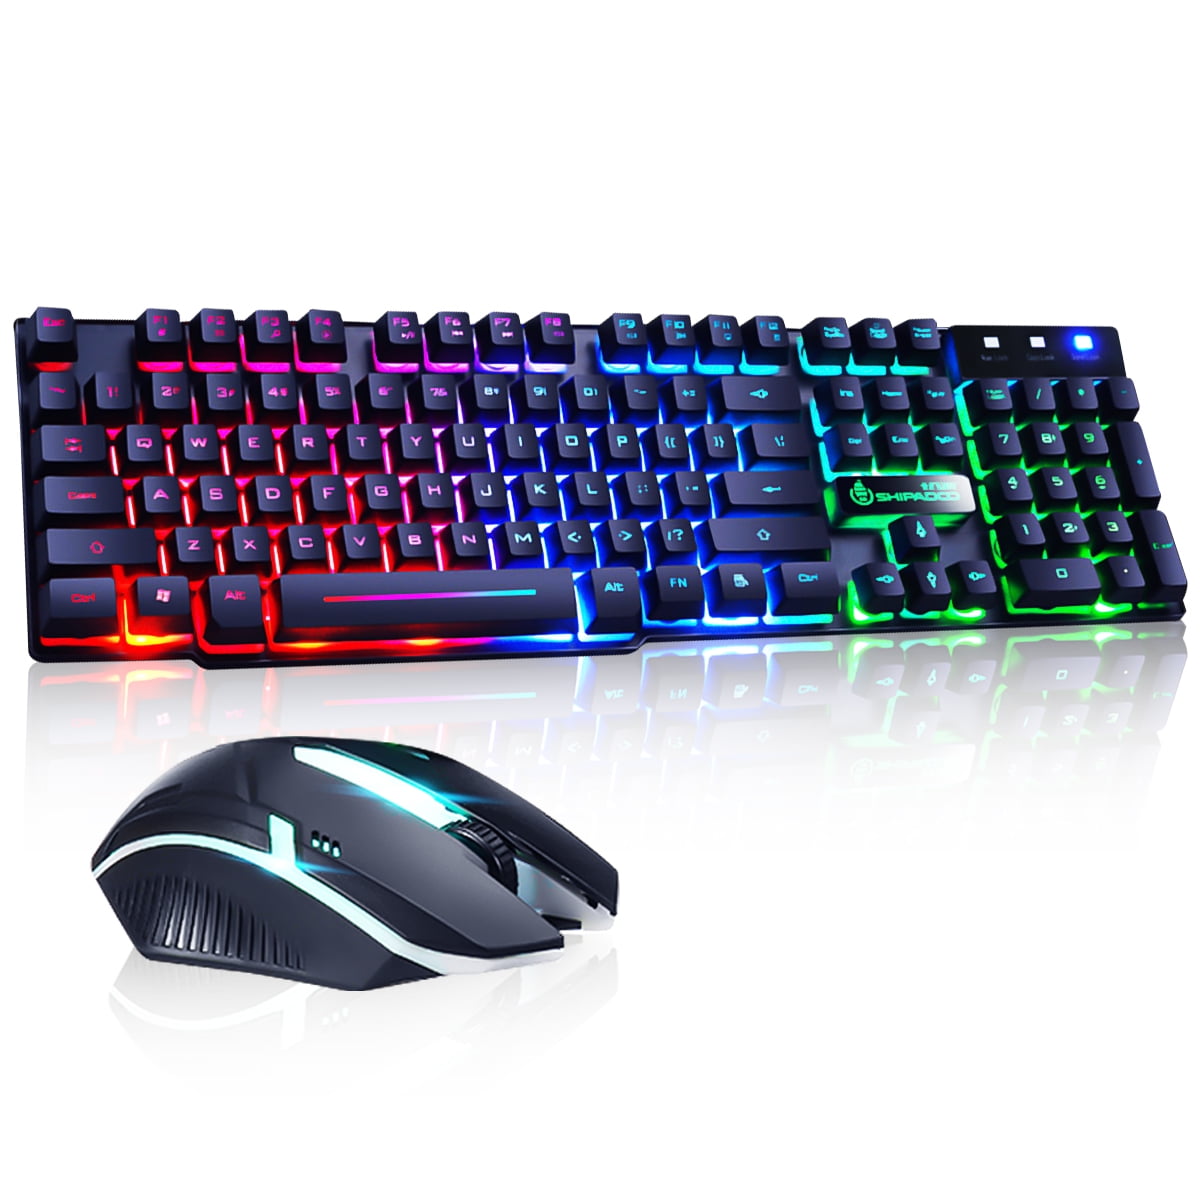 LED Backlit Ergonomic Manipulator Gaming Keyboard USB Keyboard Mouse Combination,B Wireless Charging Gaming Keyboard Mouse Set 